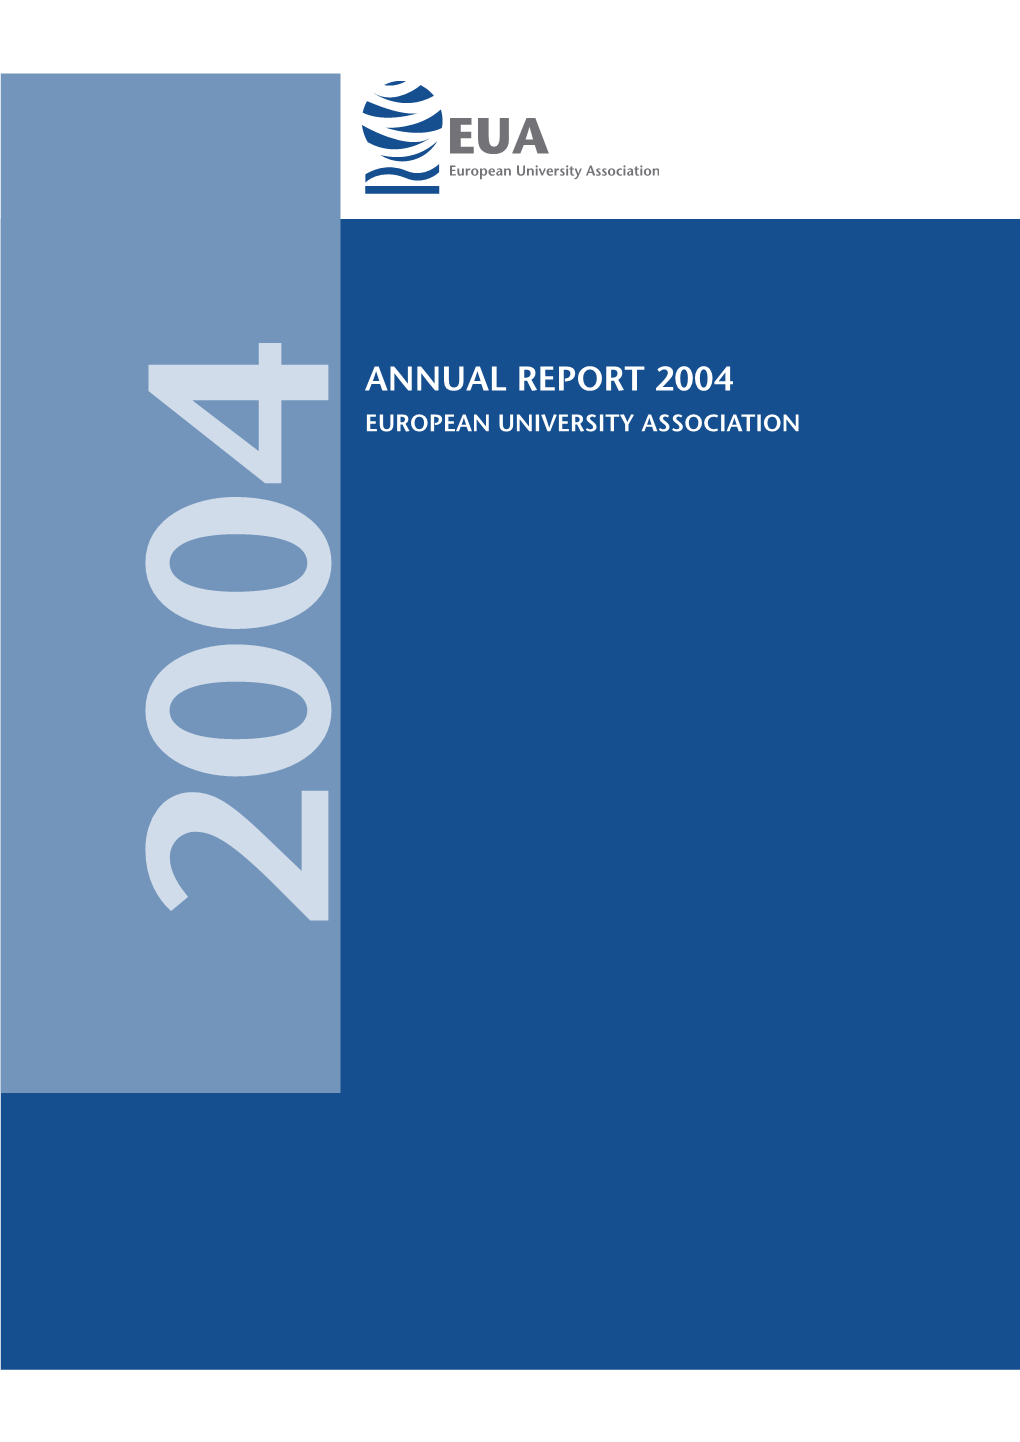 ANNUAL REPORT 2004 EUROPEAN UNIVERSITY ASSOCIATION 2004 Copyright© 2005 by the European University Association